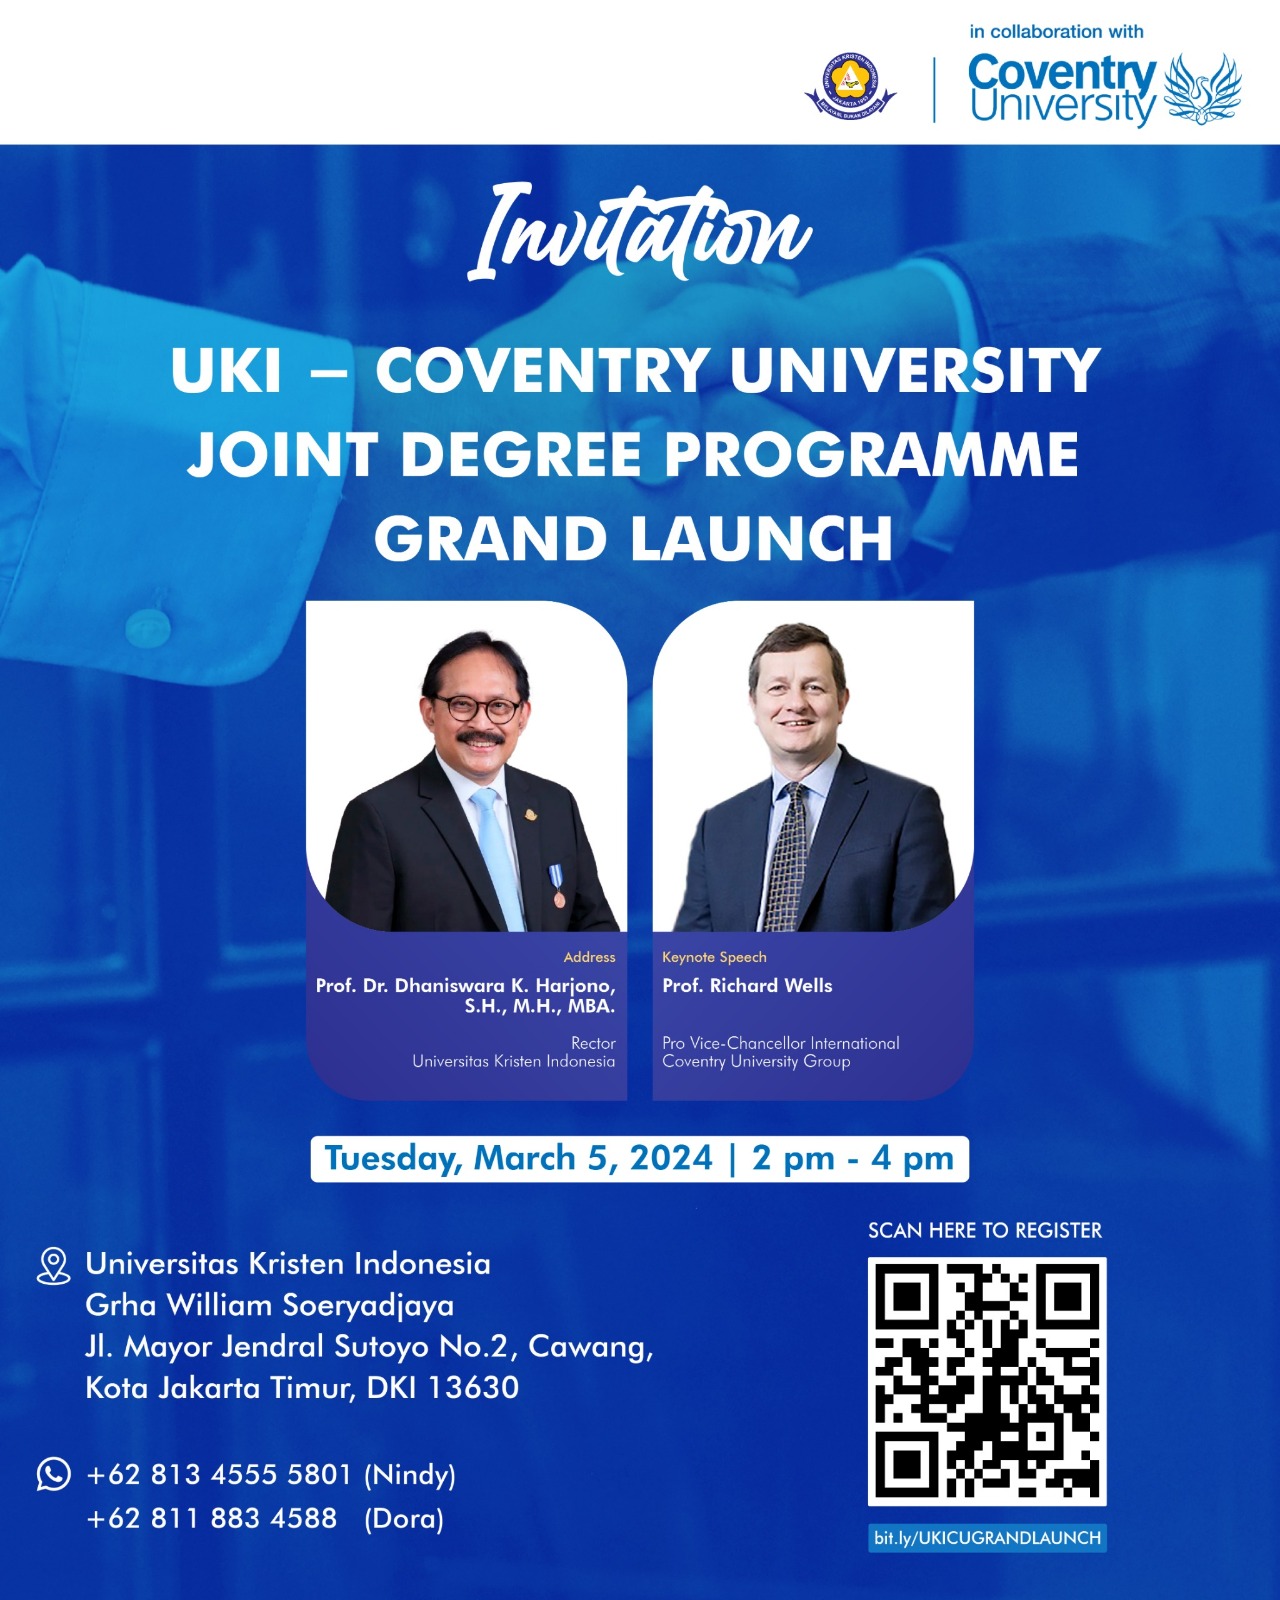 UKI - Conventry University Joint Degree Programme Grand Launch